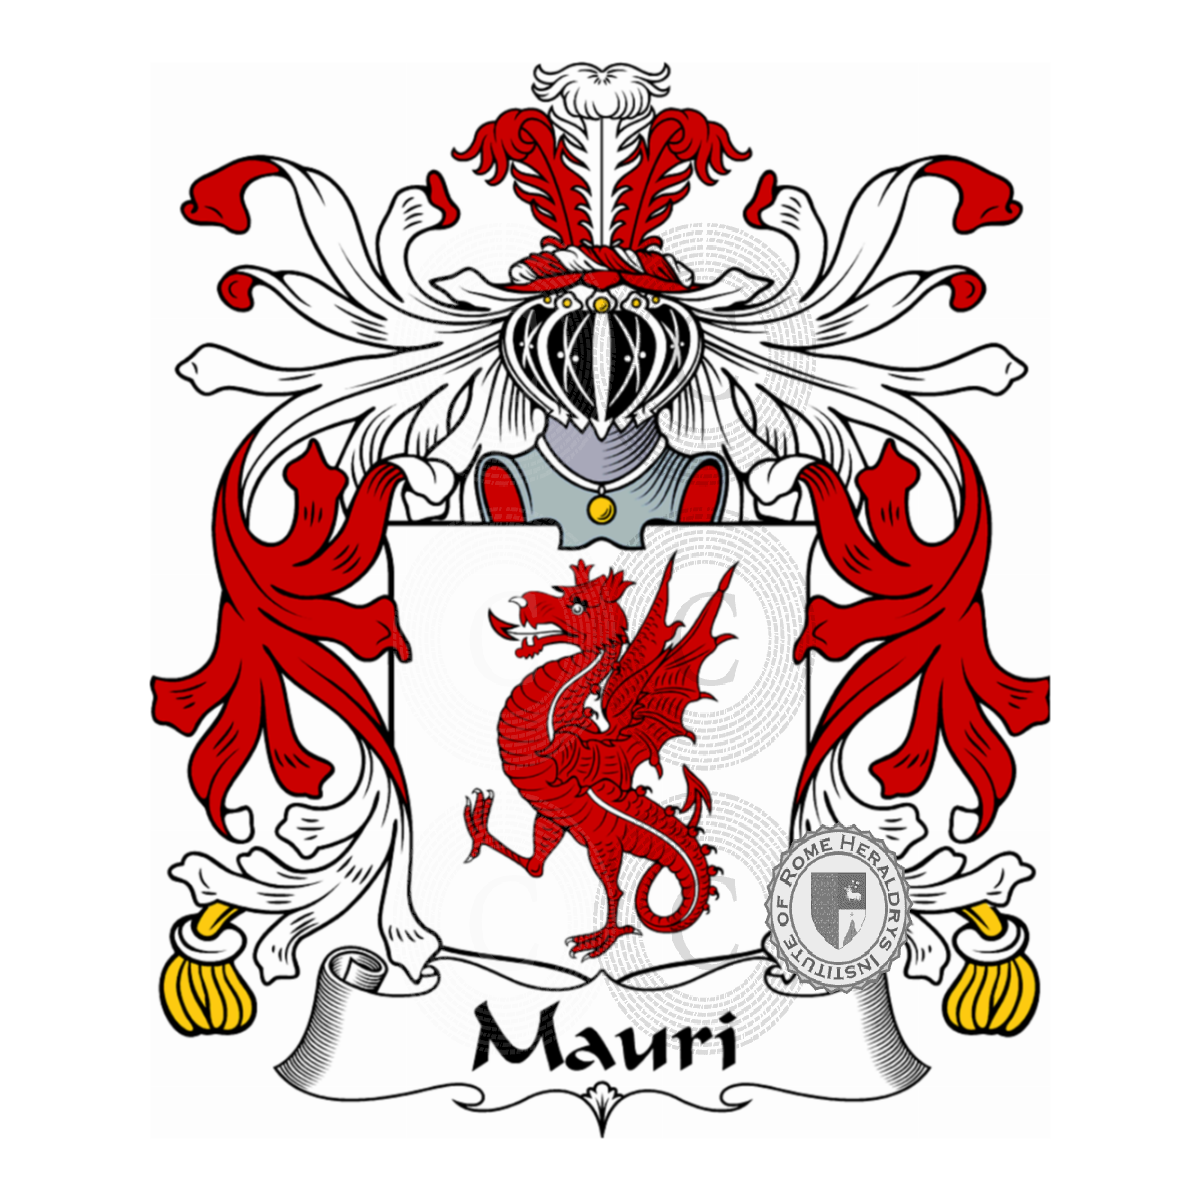 Wappen der FamilieMauri, Dellimauri,Dellimauro,Mauro